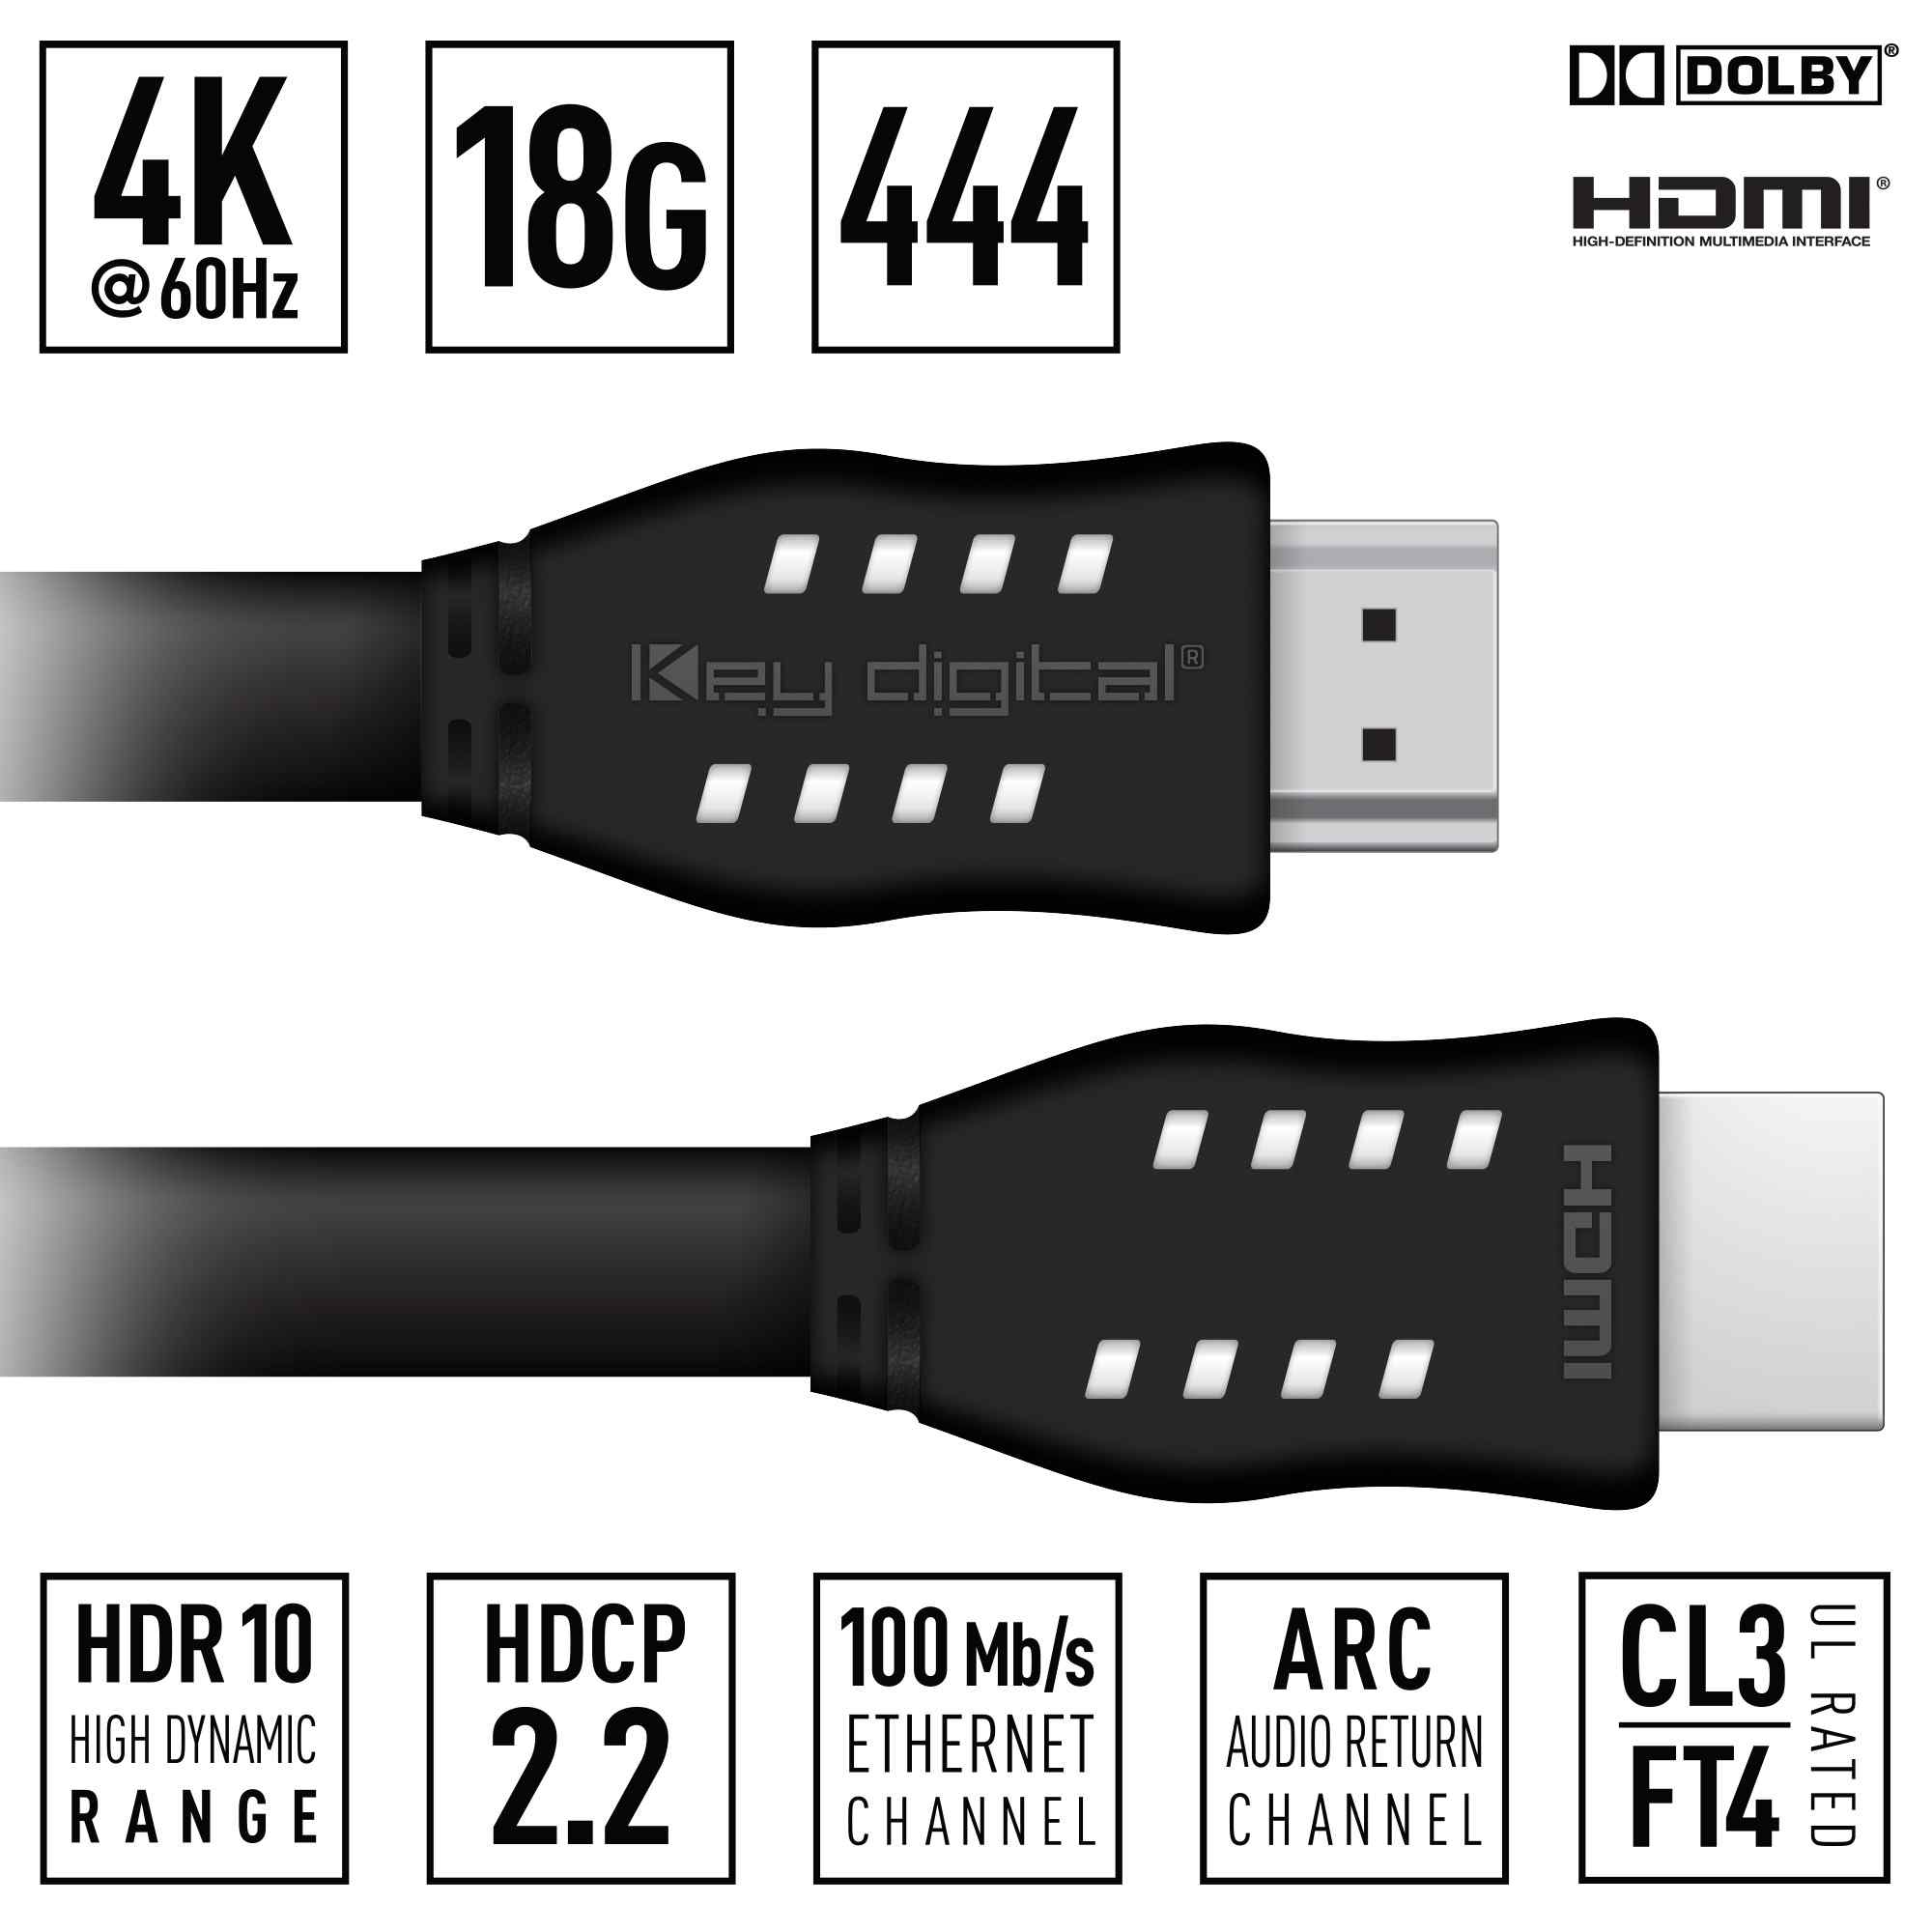 Thumbnail of Key Digital 12-feet HDMI cable product image